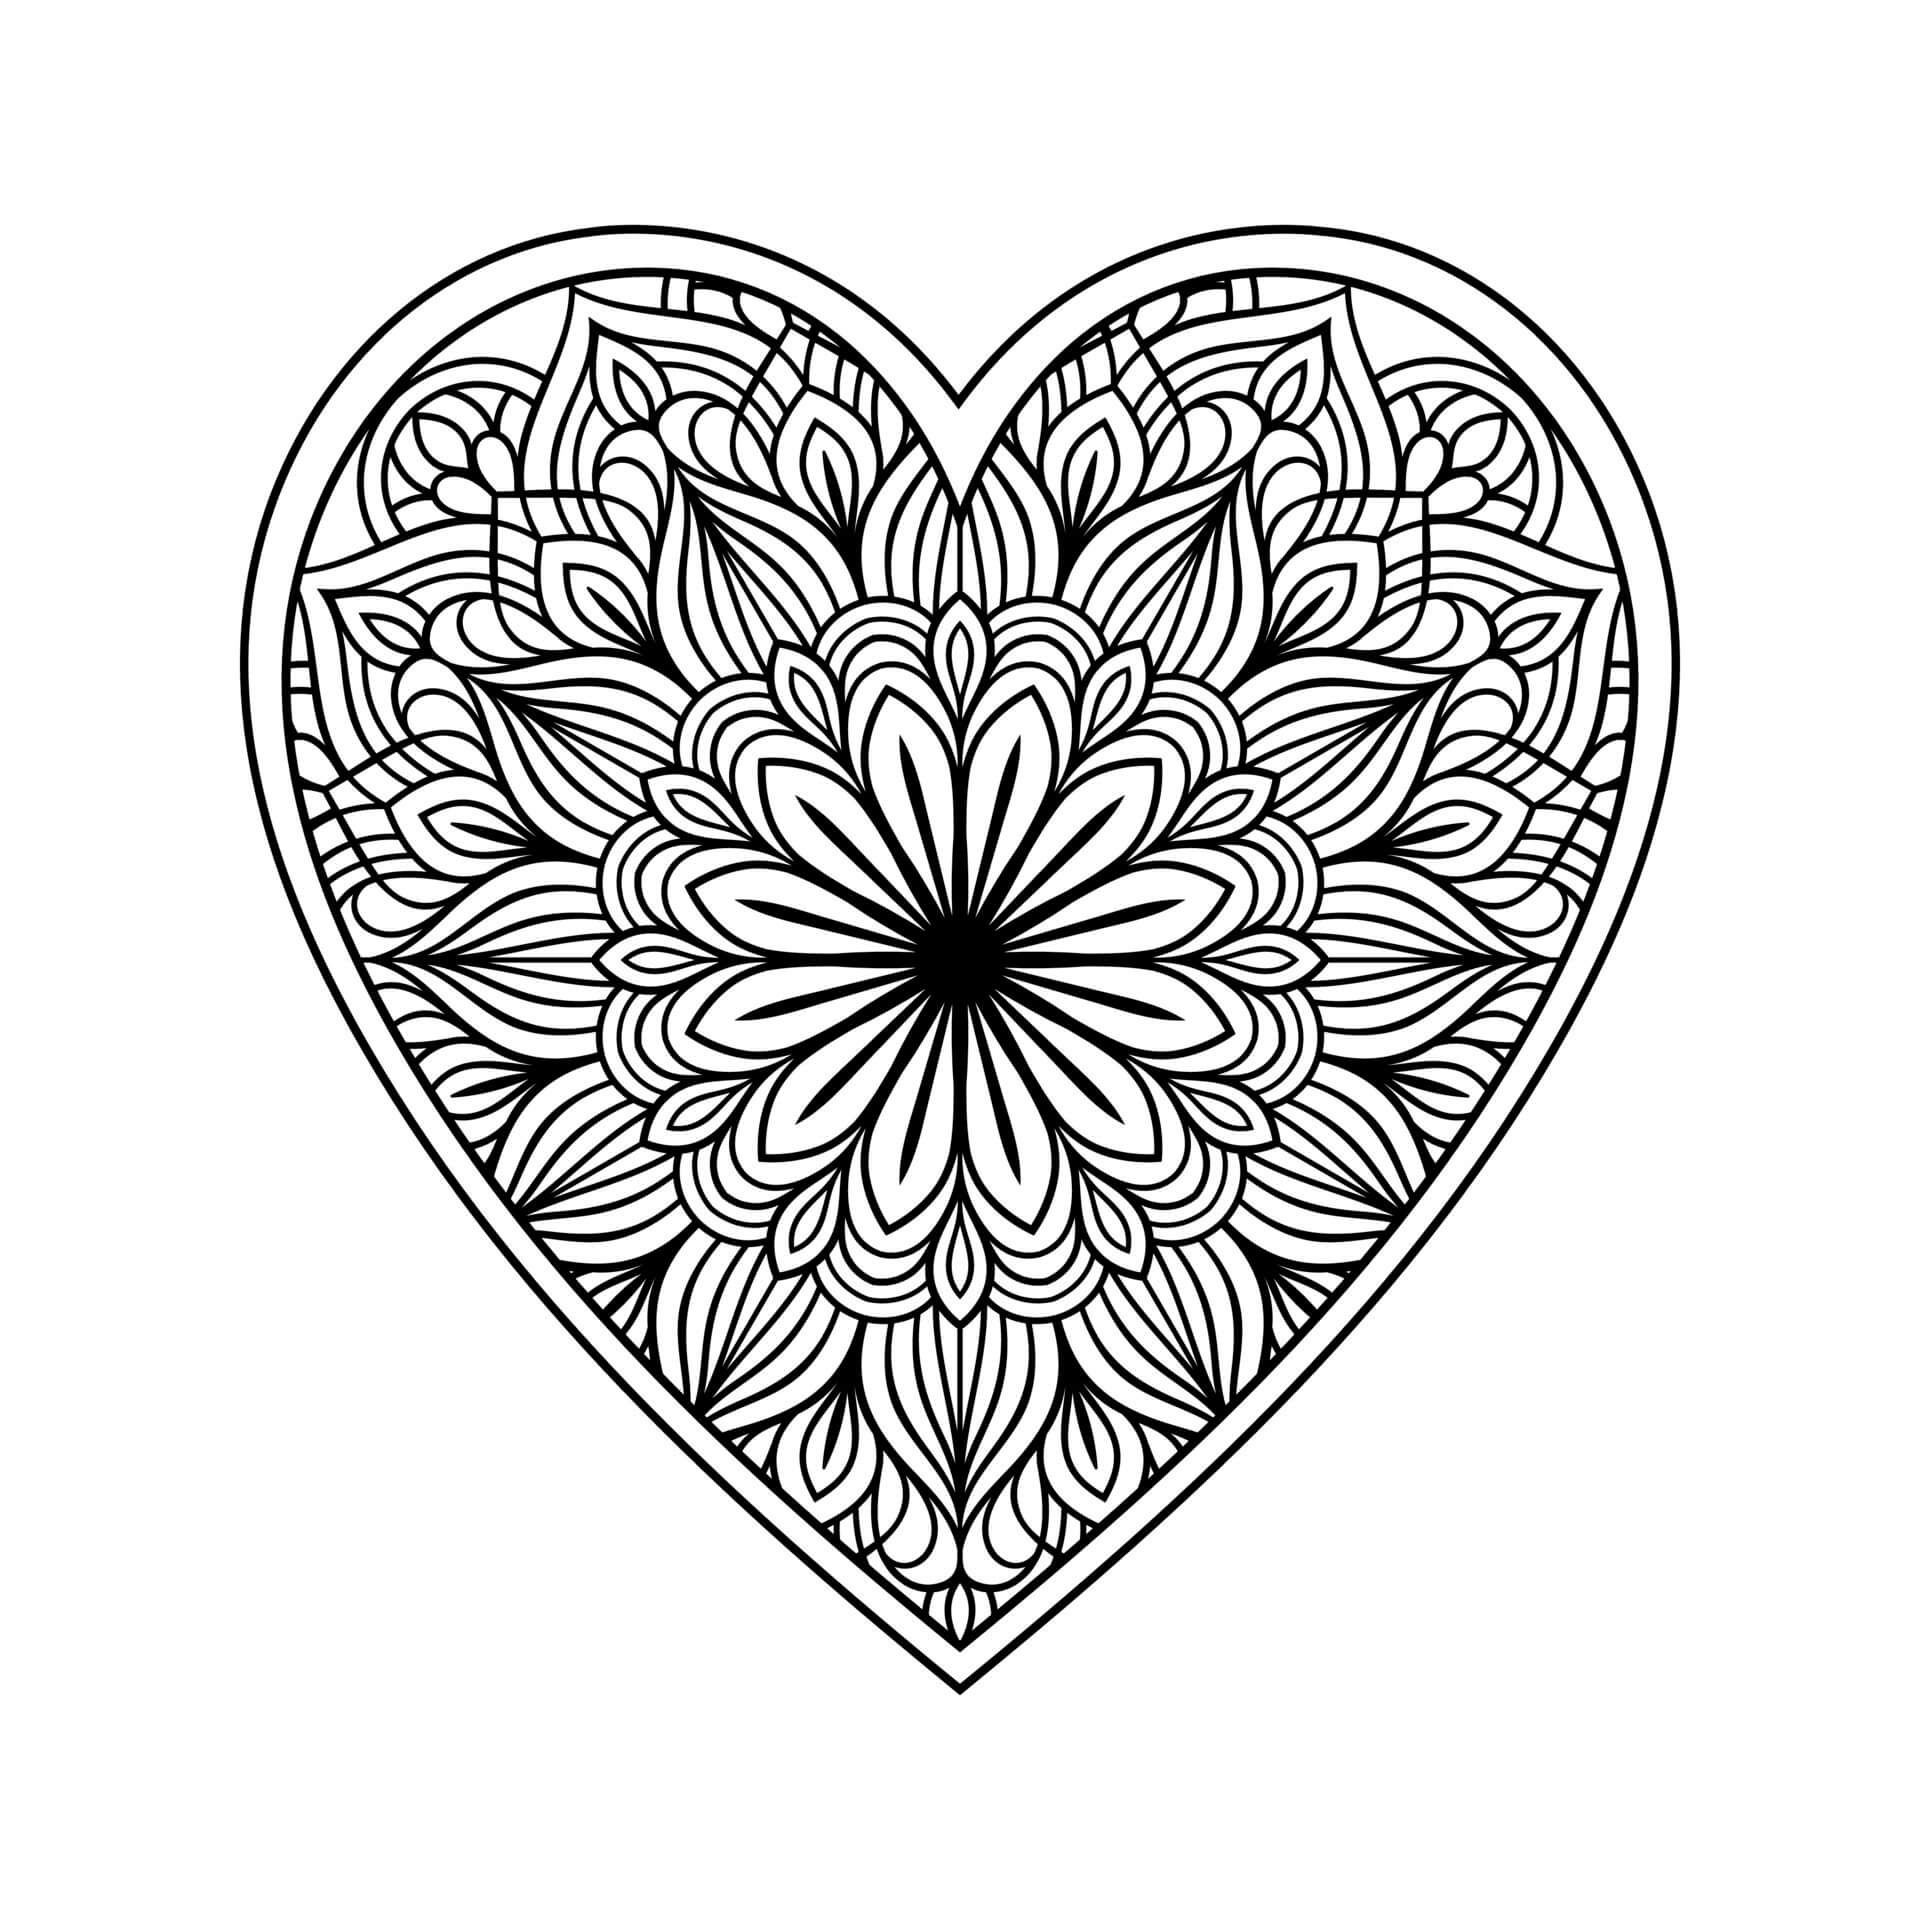 Mandala Heart Coloring Page - Sheet 4 Mandalas